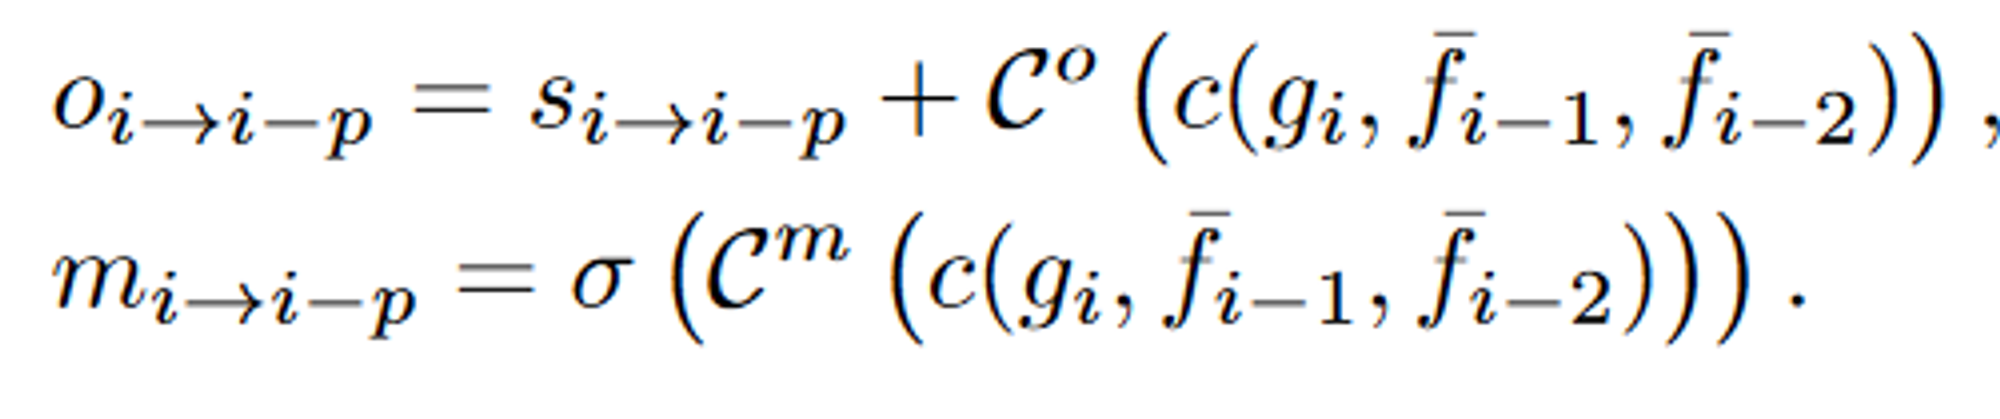  p=1,2；σ表示sigmoid计算；C表示卷积操作；c表示在通道数上叠加 